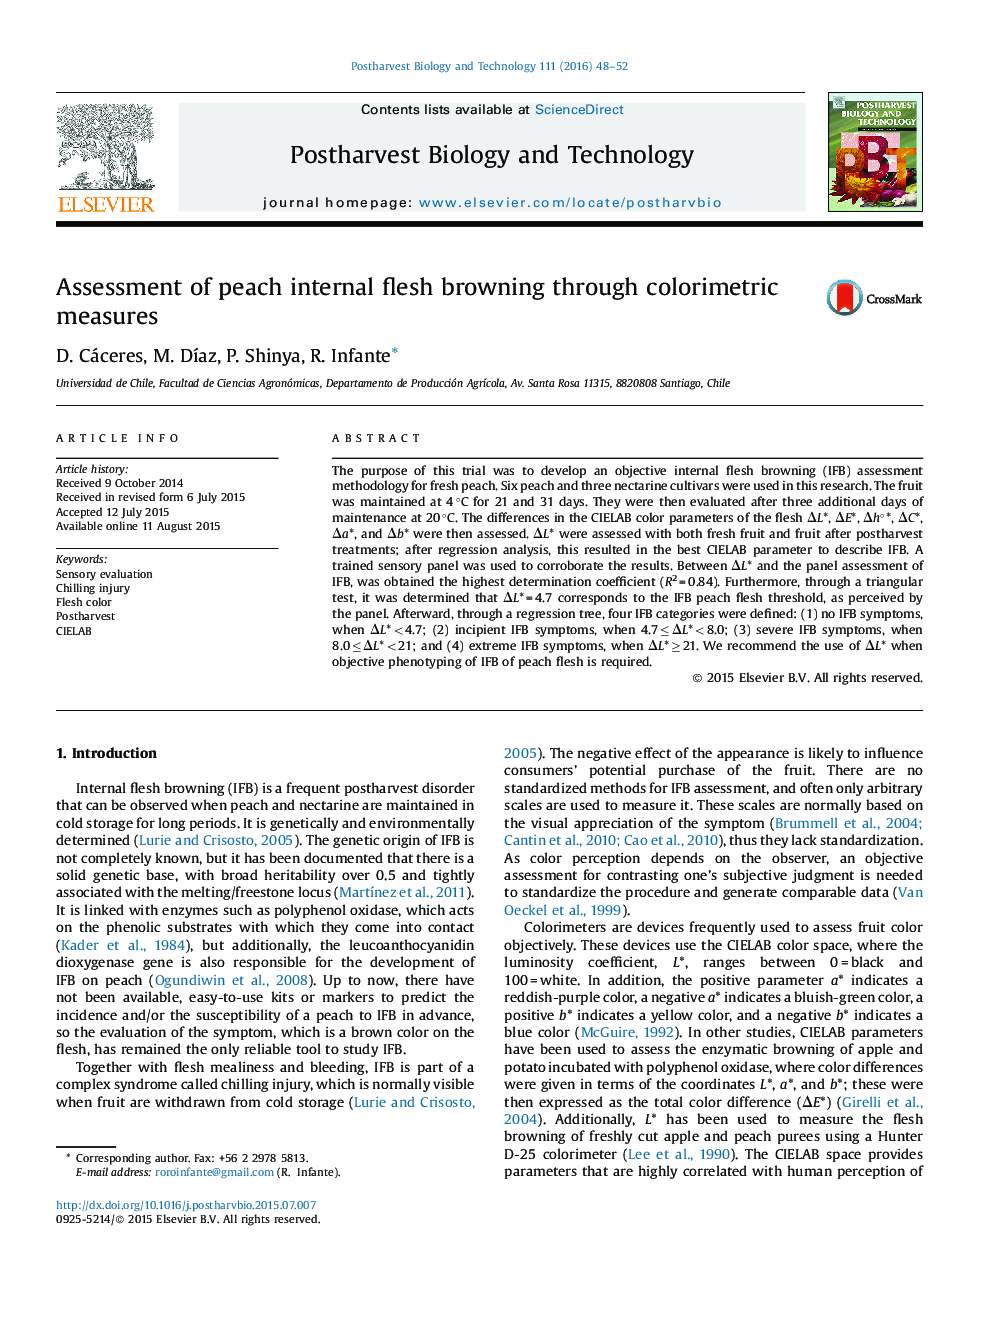 Assessment of peach internal flesh browning through colorimetric measures